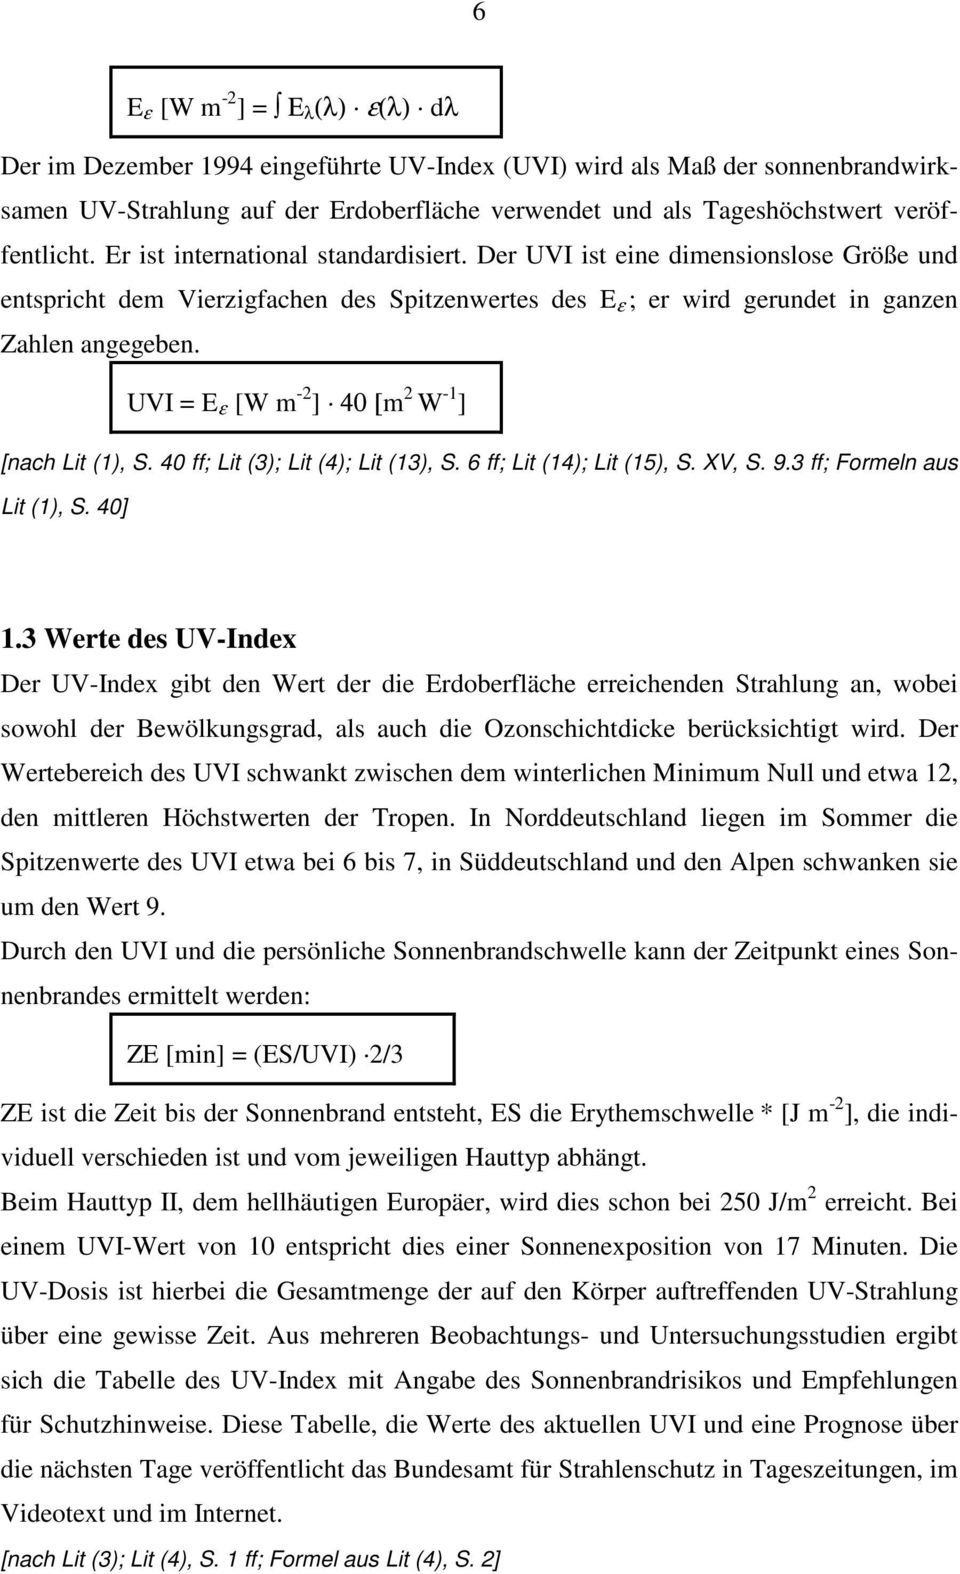 UVI = E ε [W m -2 ] 40 [m 2 W -1 ] [nach Lit (1), S. 40 ff; Lit (3); Lit (4); Lit (13), S. 6 ff; Lit (14); Lit (15), S. XV, S. 9.3 ff; Formeln aus Lit (1), S. 40] 1.